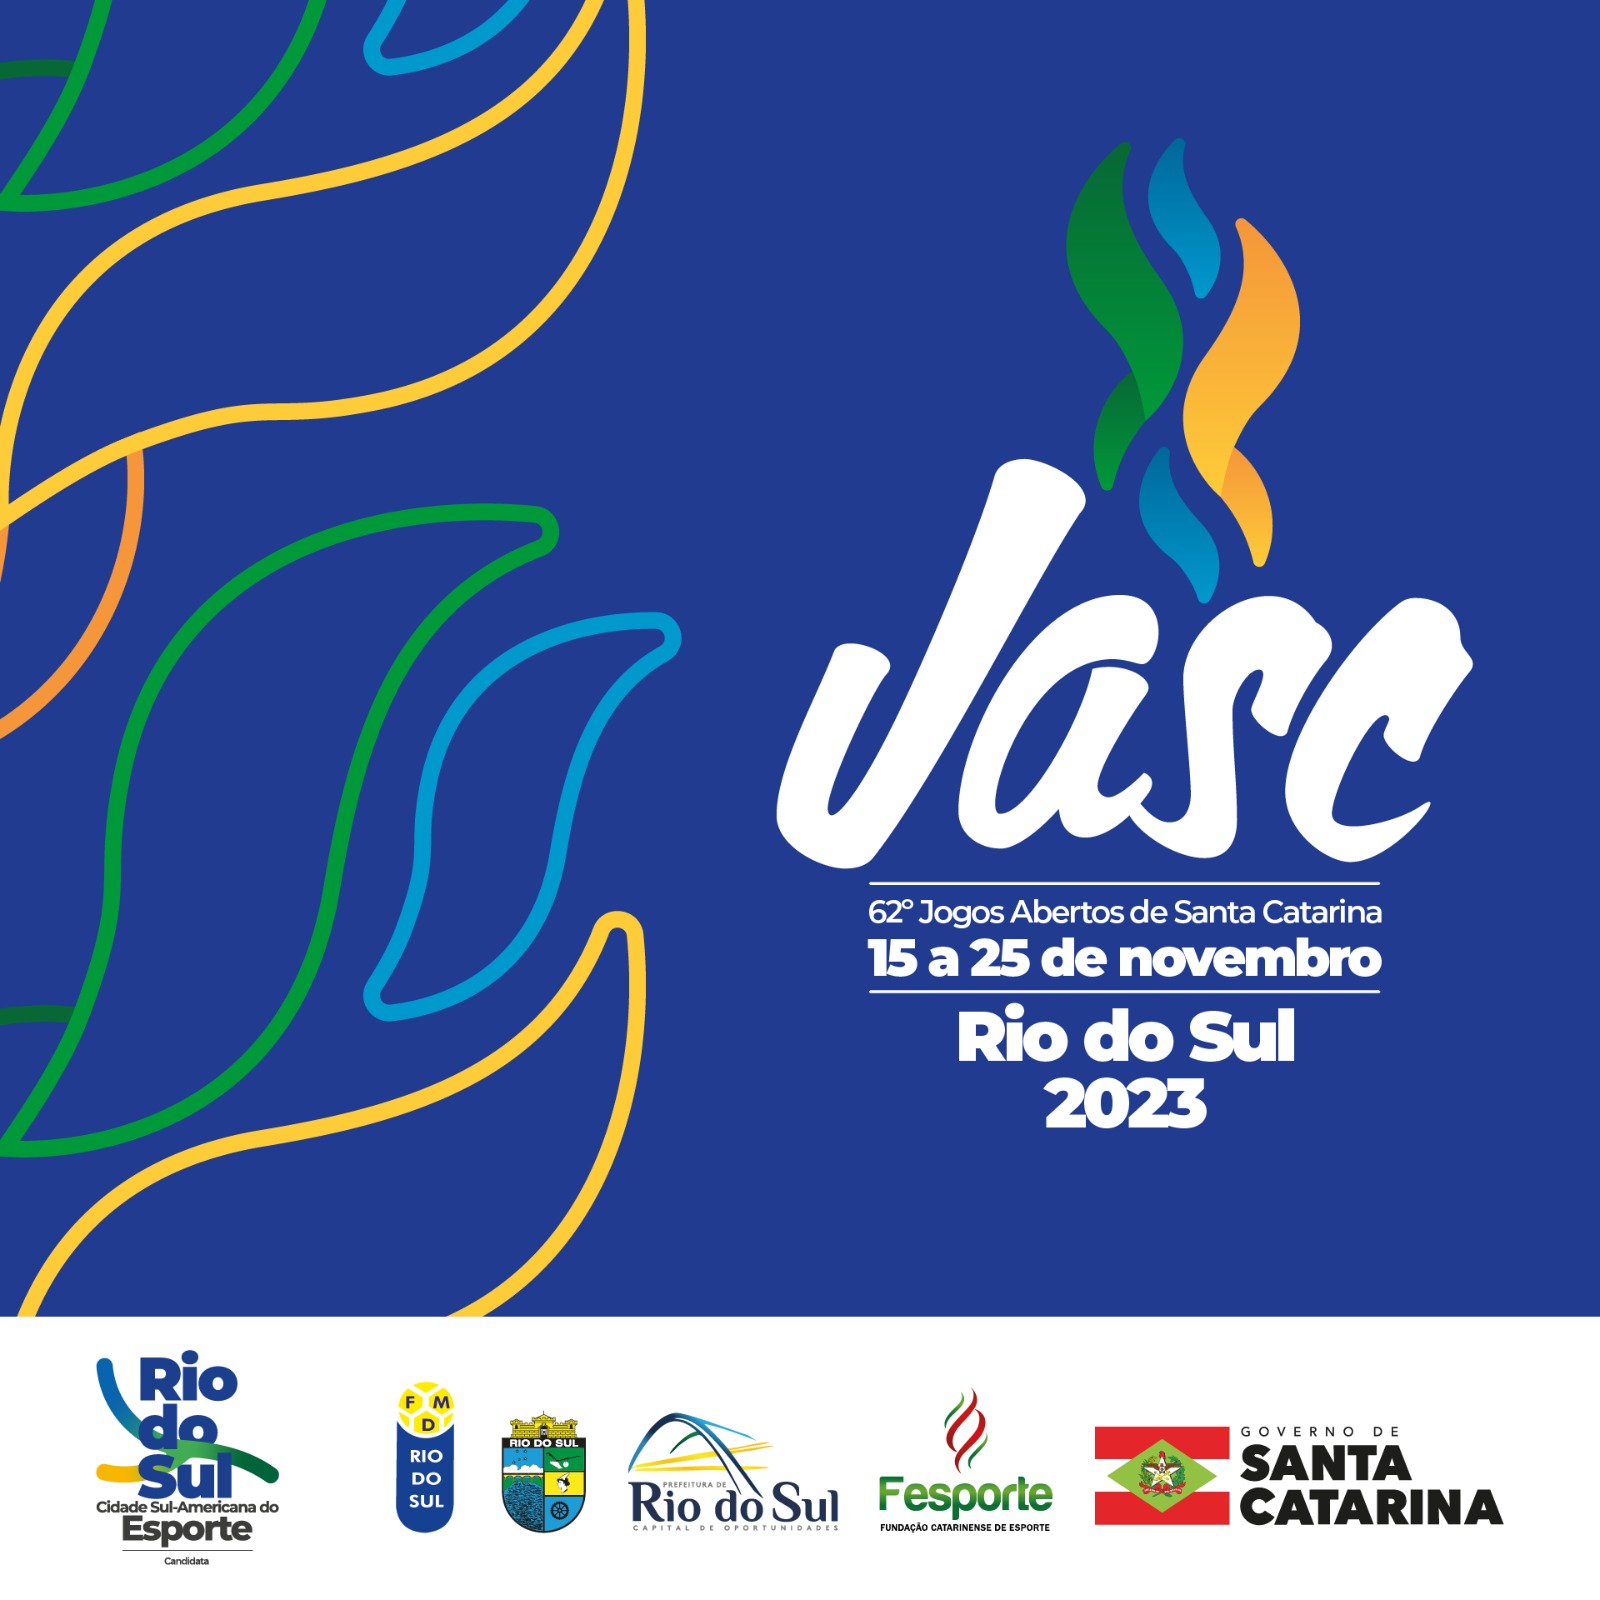 Comitê Organizador dos Jogos Abertos de Santa Catarina divulga logomarca do evento